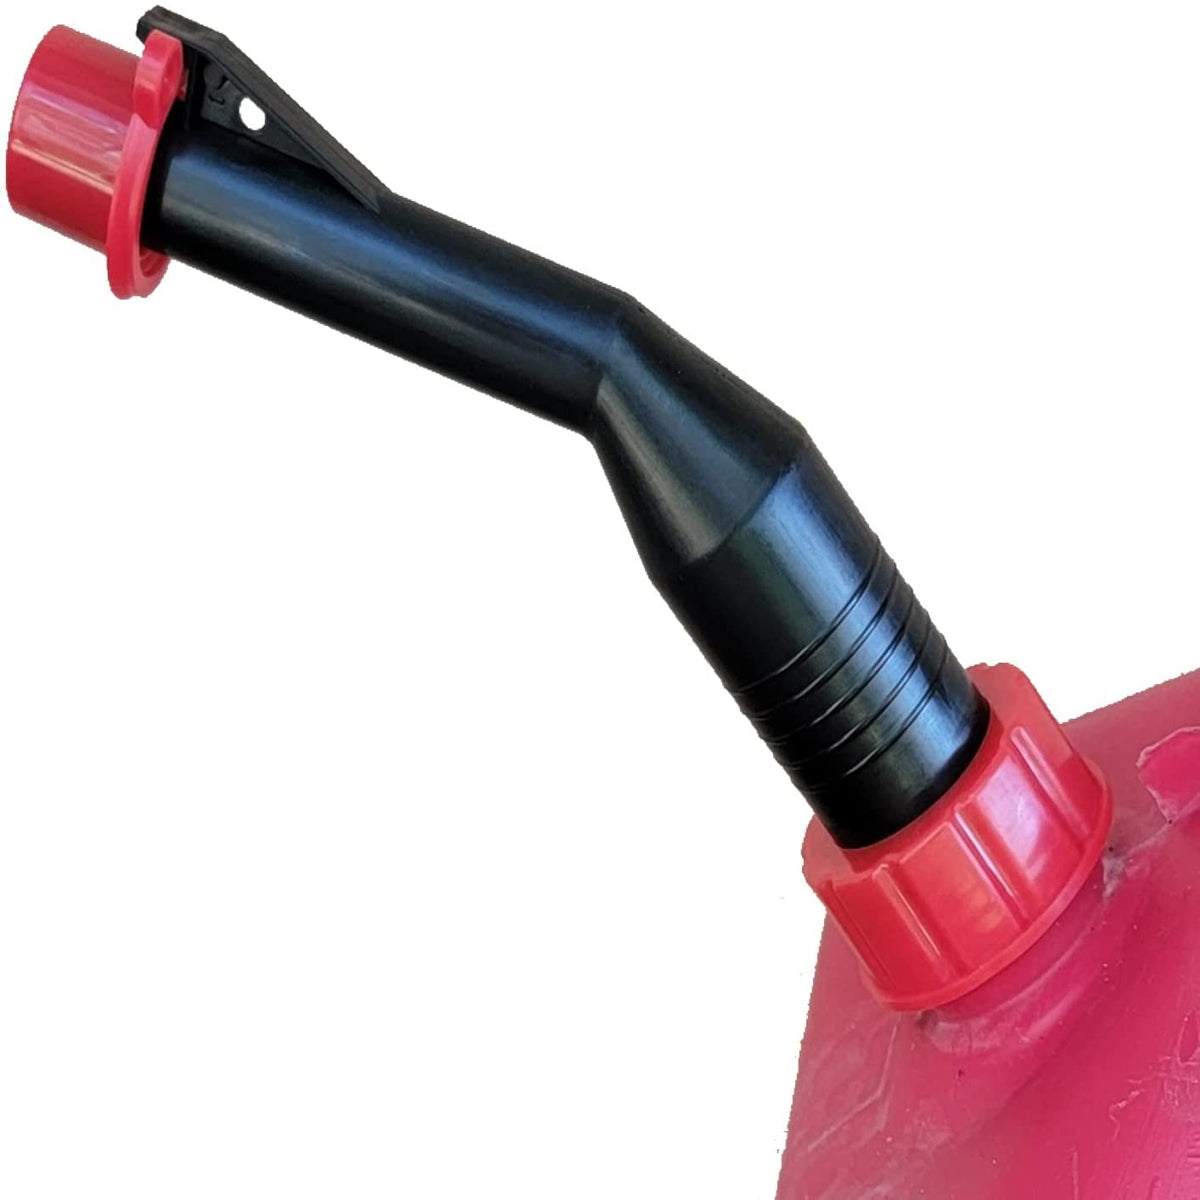 Gas Can Replacement Spout Kit, Flexible Pour Nozzle with Gasket